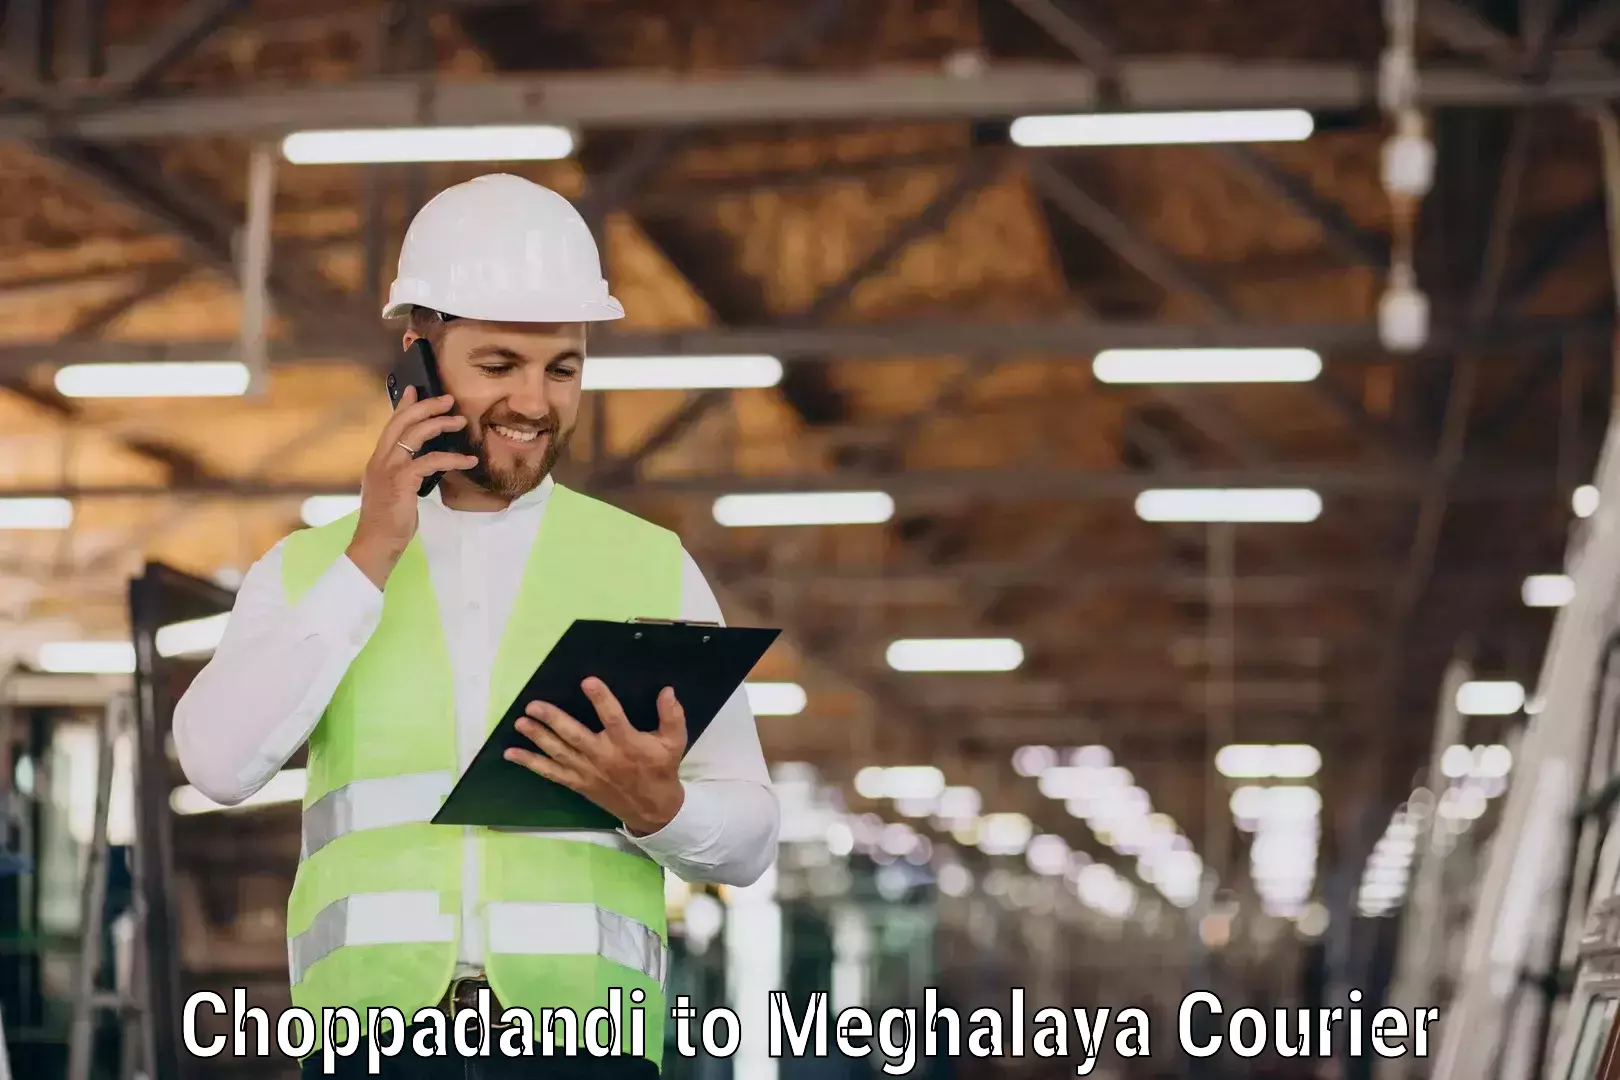 Efficient order fulfillment Choppadandi to Meghalaya